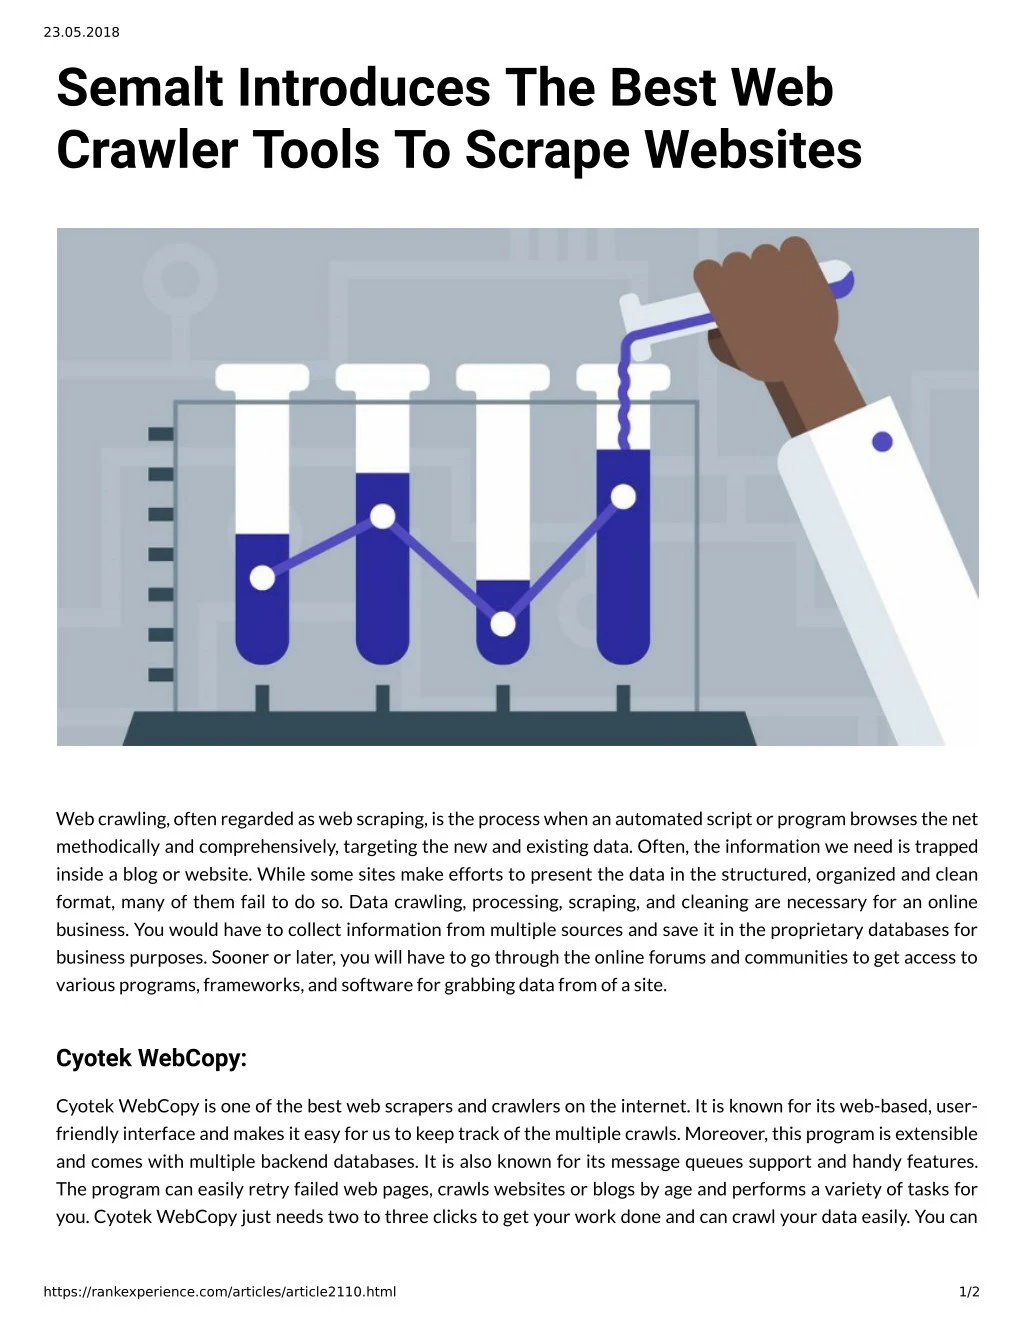 23 05 2018 semalt introduces the best web crawler